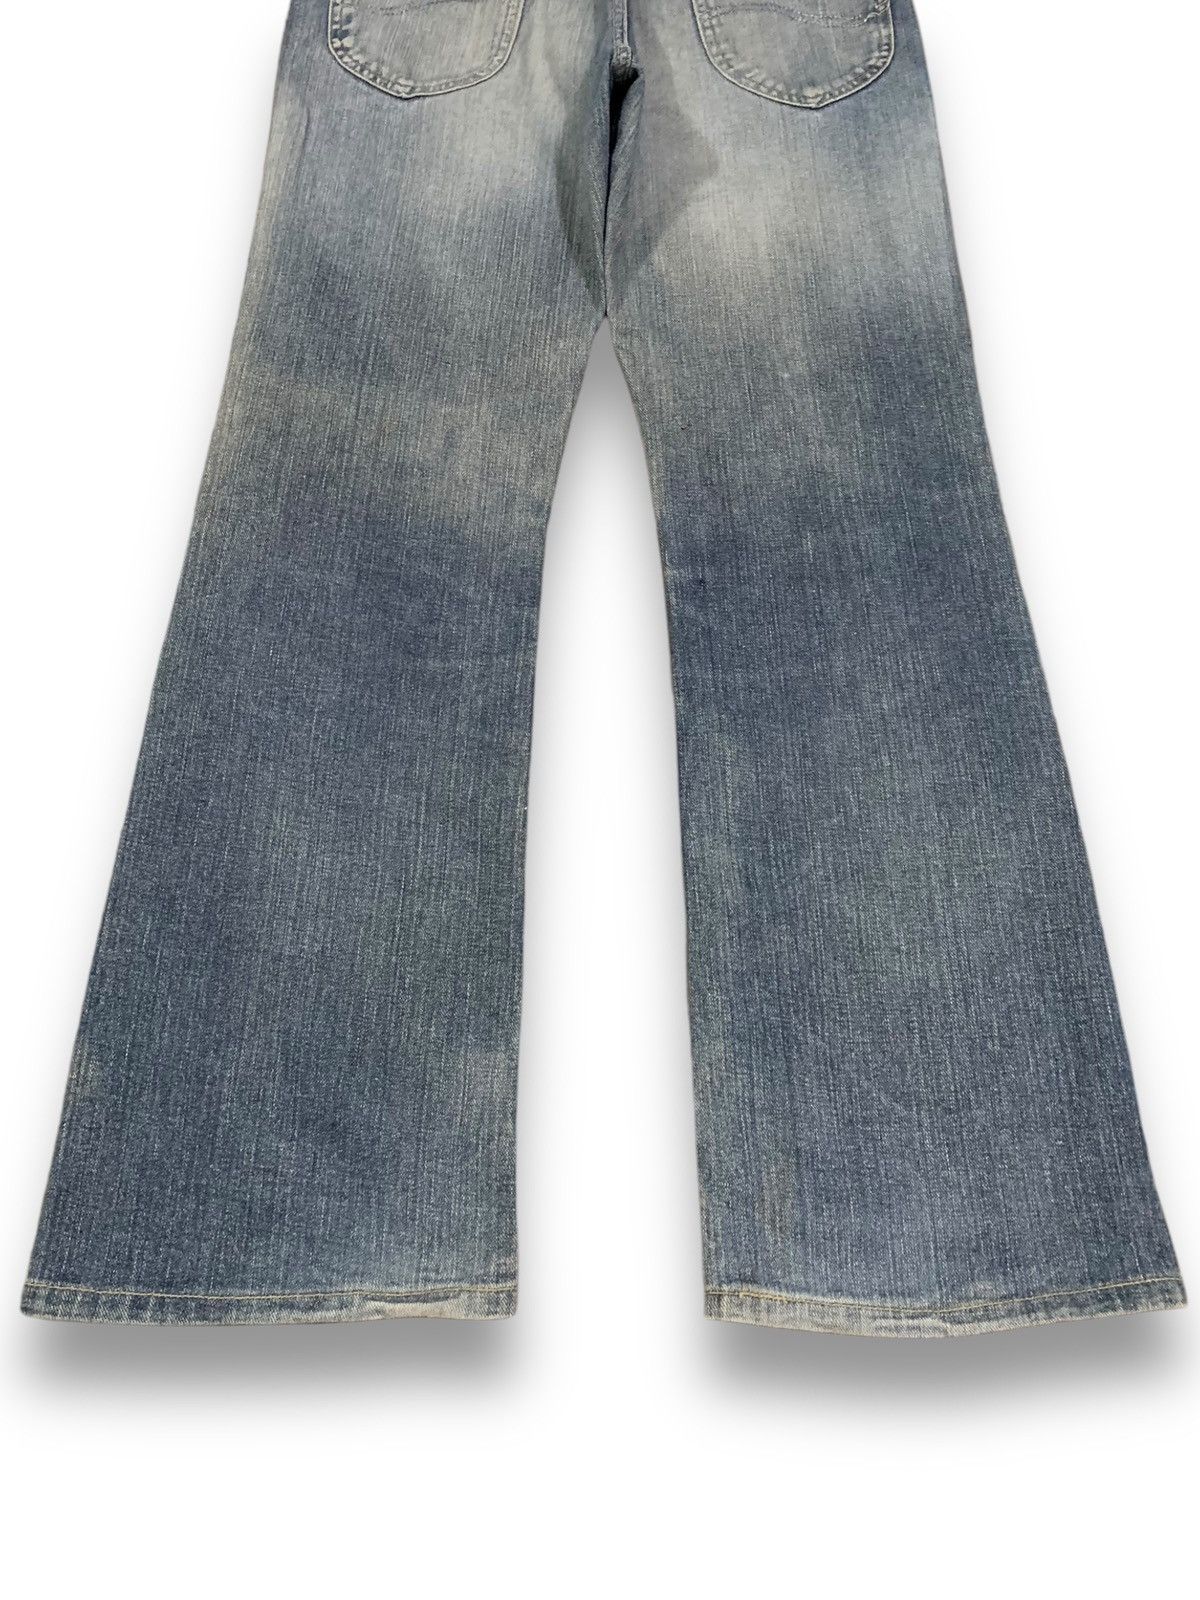 Lee Vintage Lee Cowboy Sanforized Distressed Flared Jeans Size US 31 - 15 Thumbnail